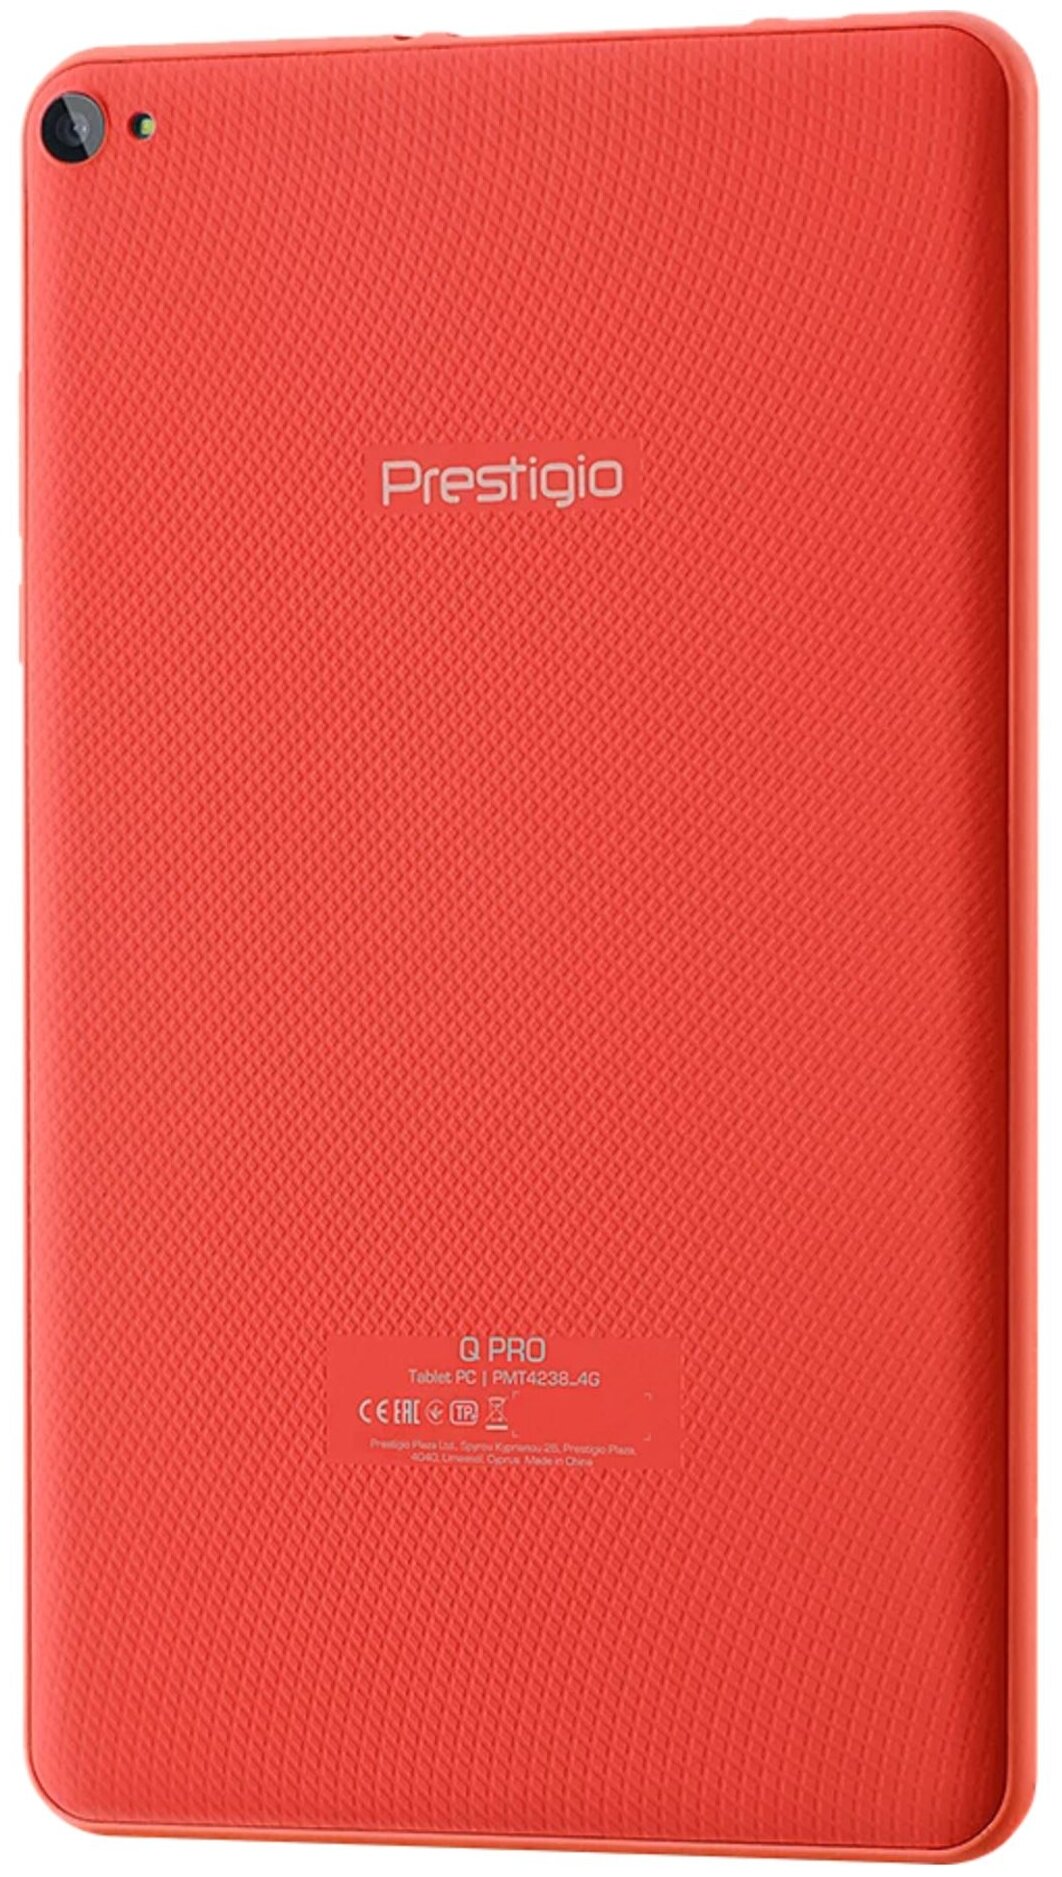 Prestigio Q Pro PMT4238 16GB 4G Тёмно-серый